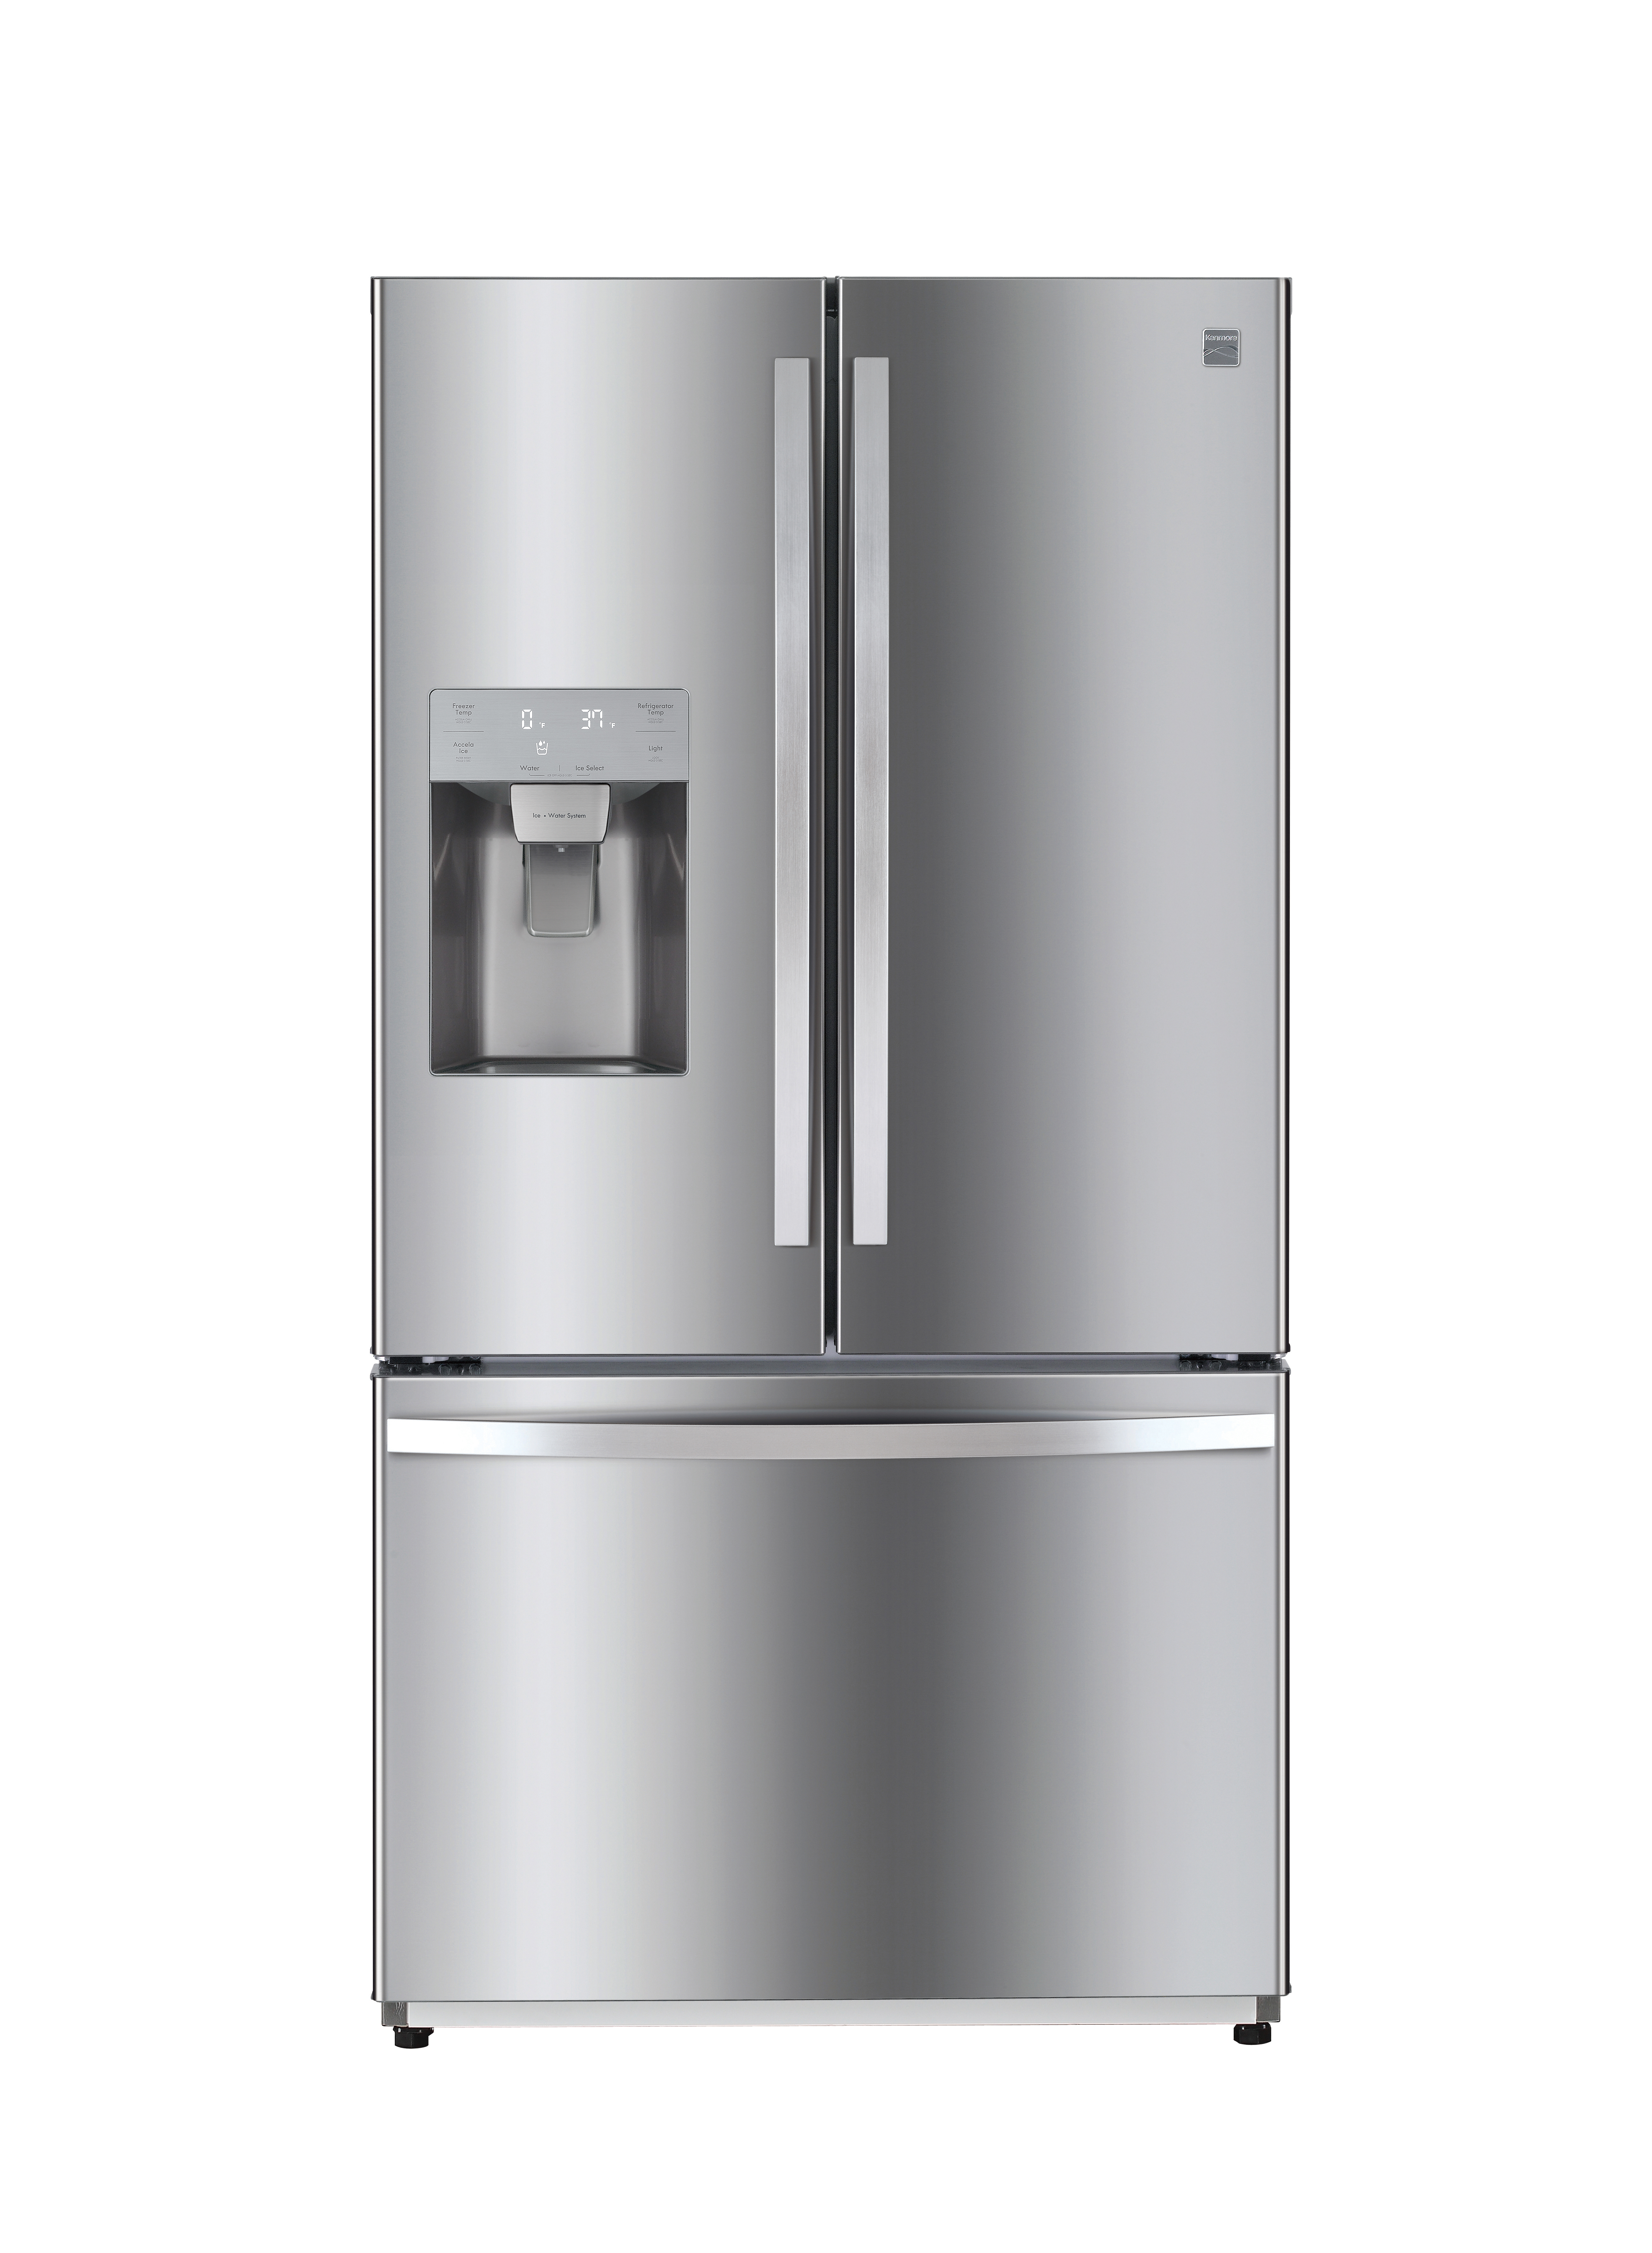 Kenmore 75035 25.5 cu. ft. French Door Refrigerator with Fingerprint Resistant Stainless Steel